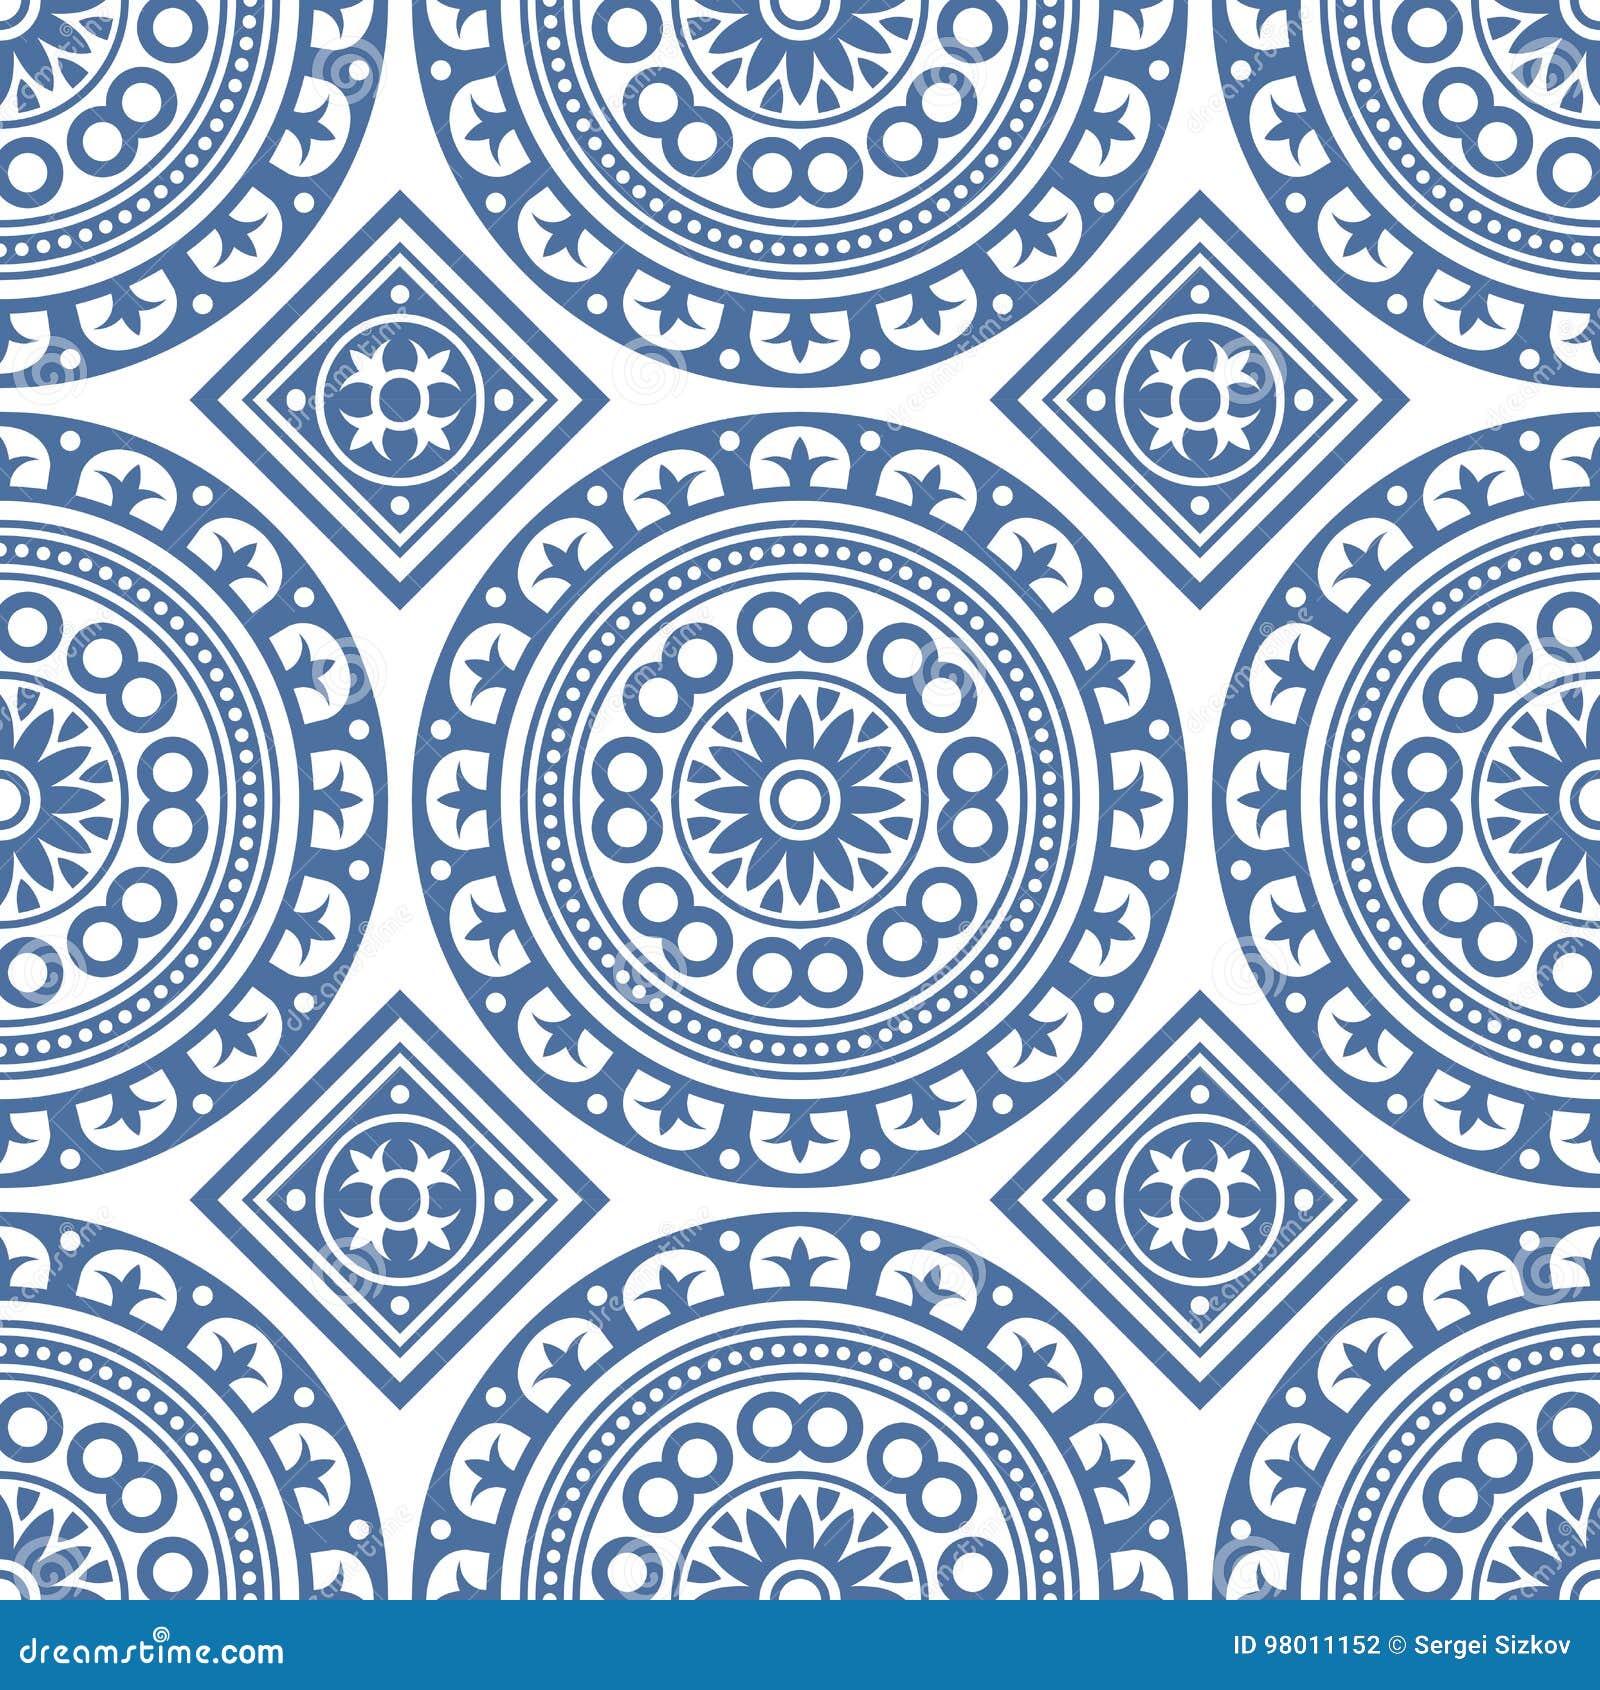 azulejo seamless portuguese tile blue pattern. 